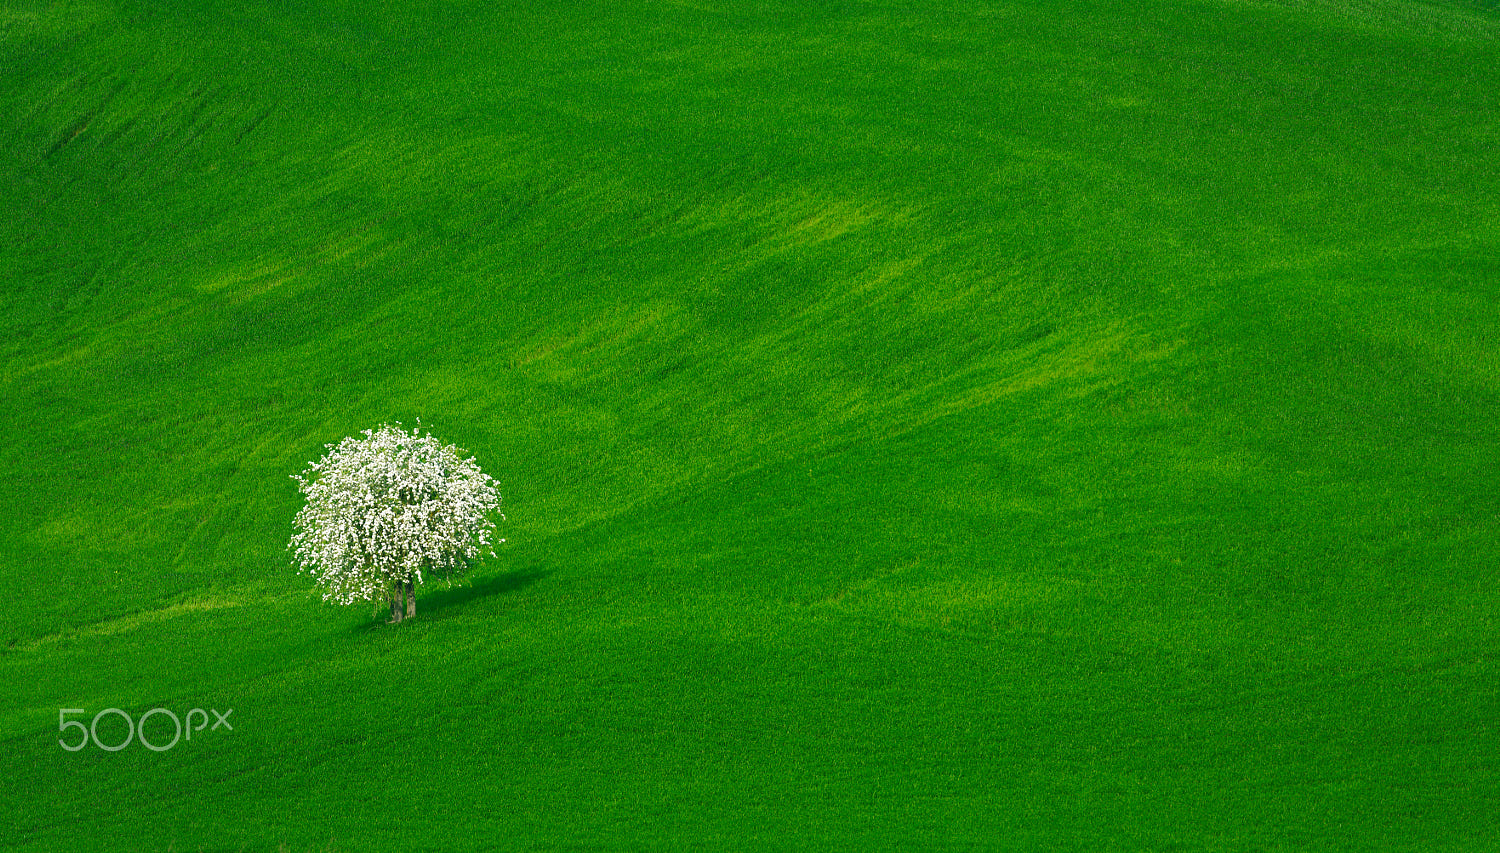 solitary tree photography lost green maze mustafa kamari